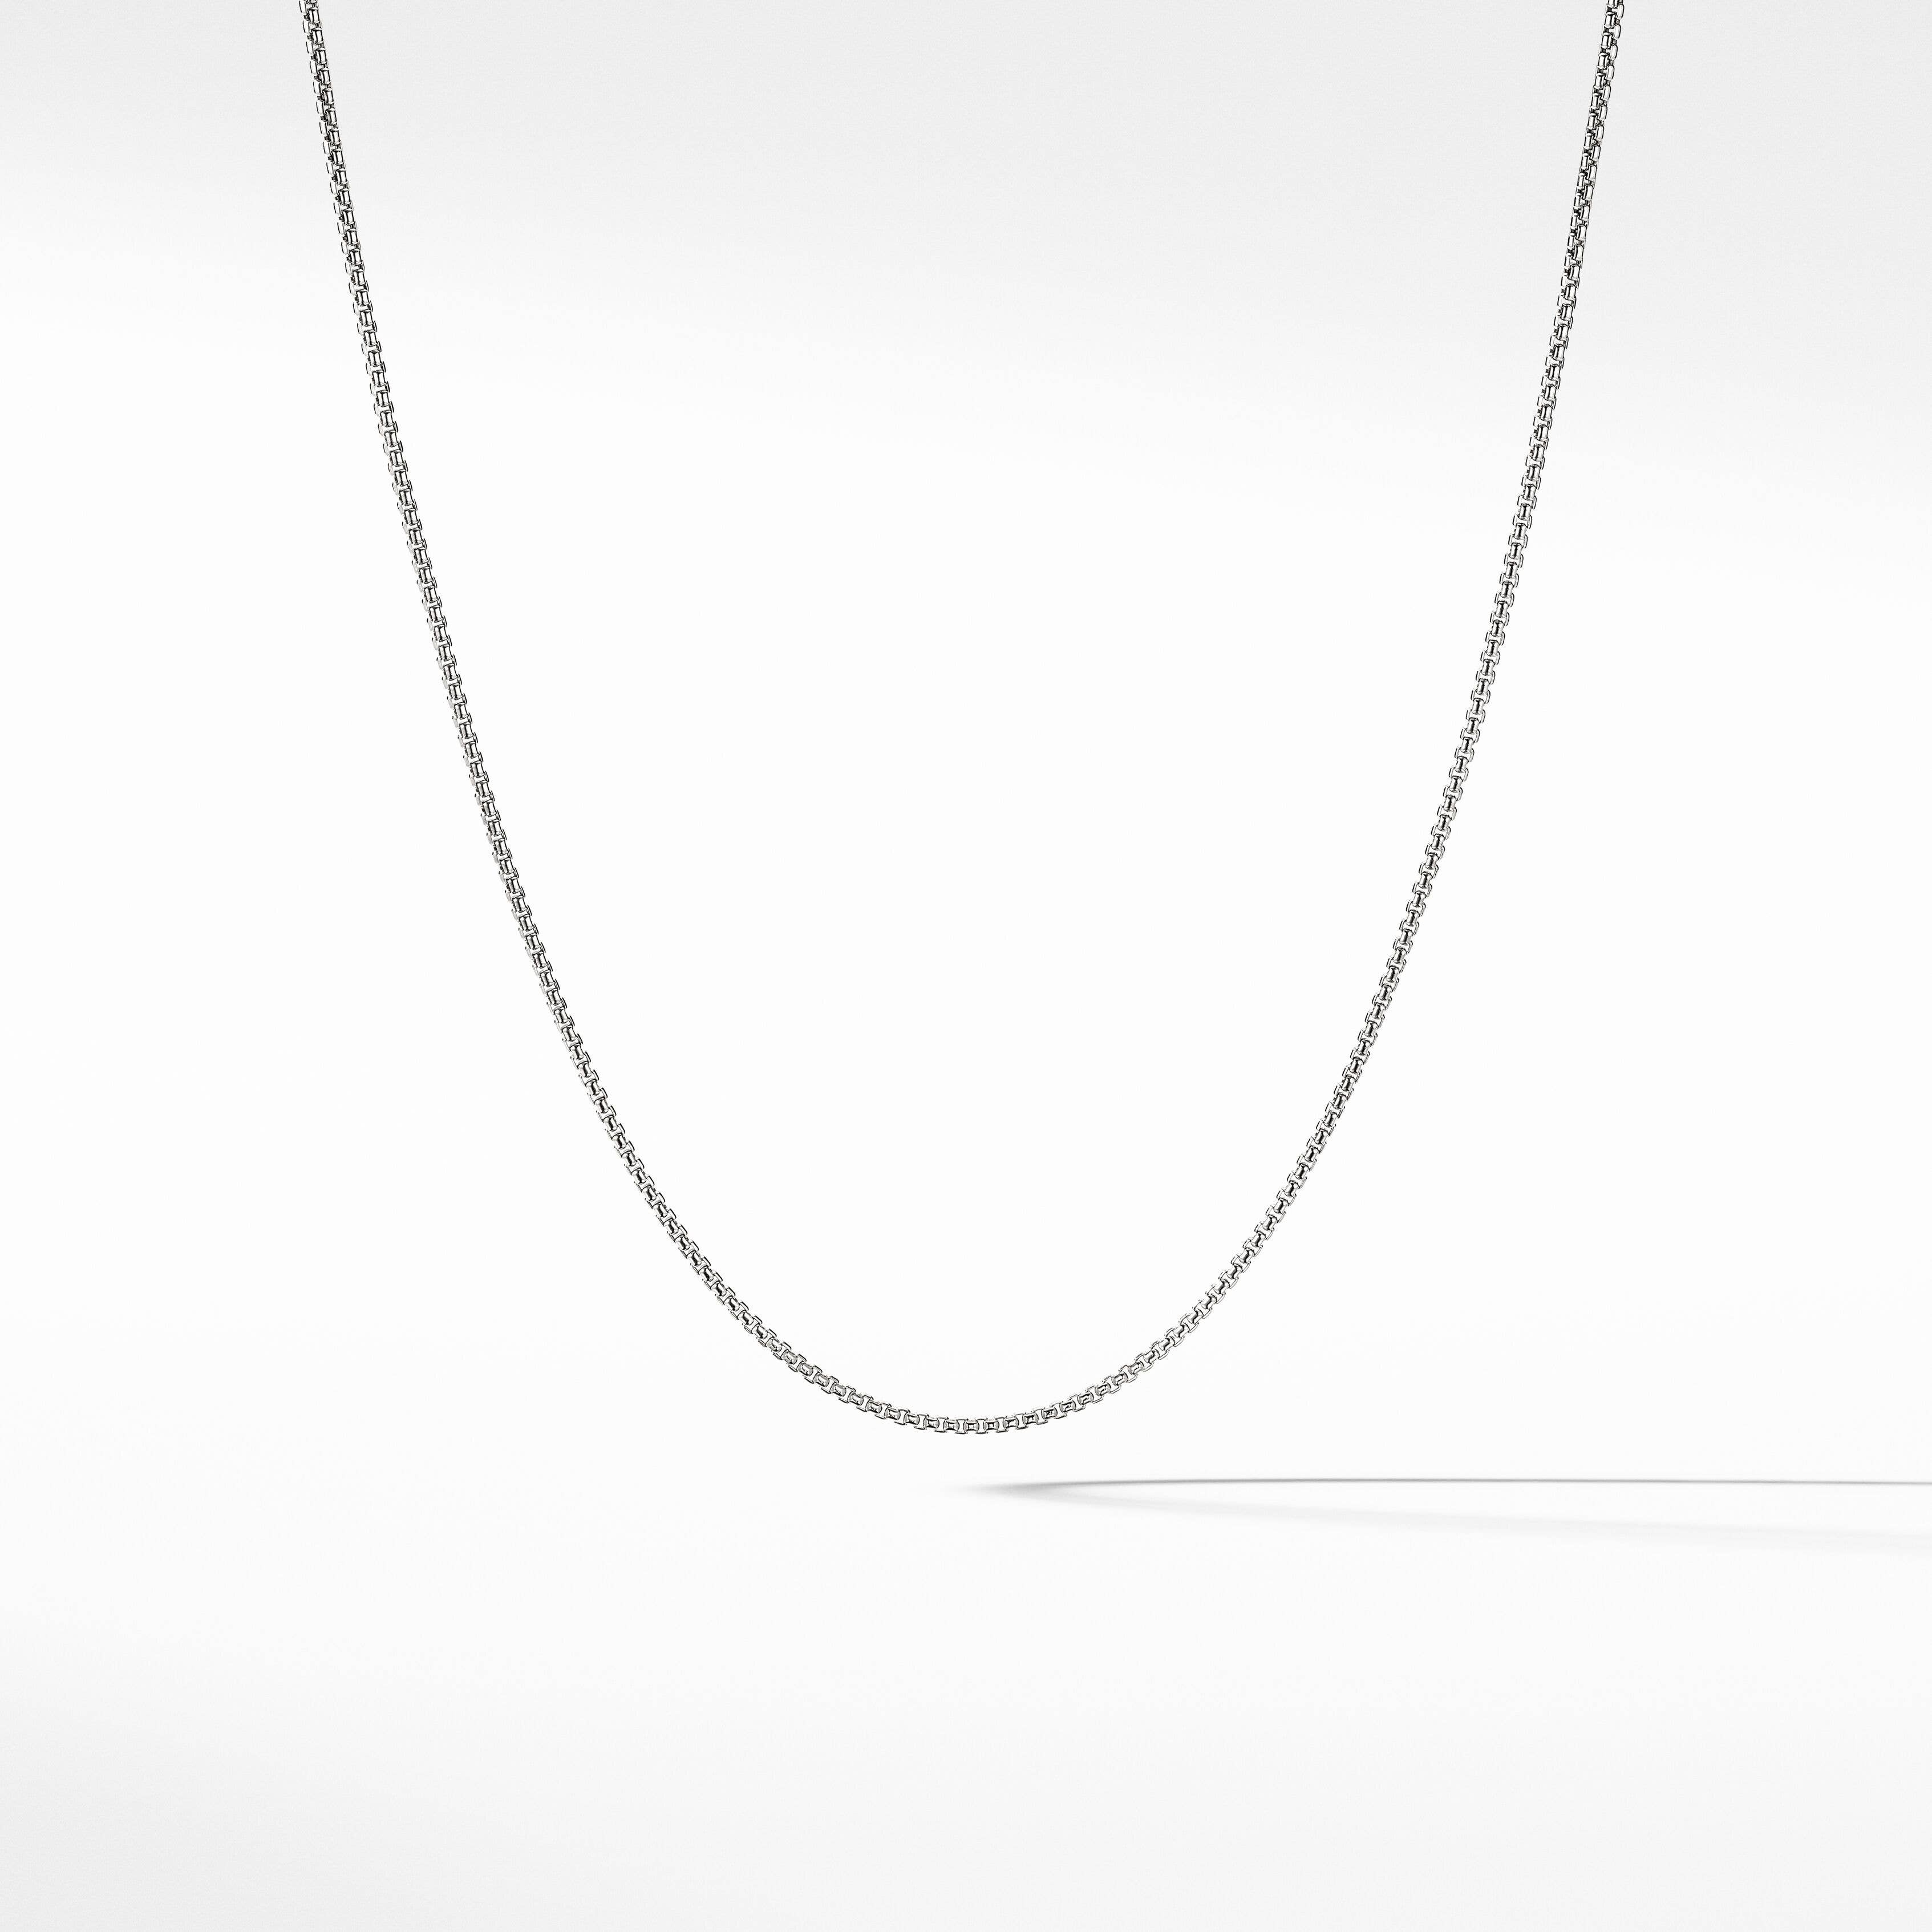 Box Chain Slider Necklace in 18K White Gold, 1.7mm